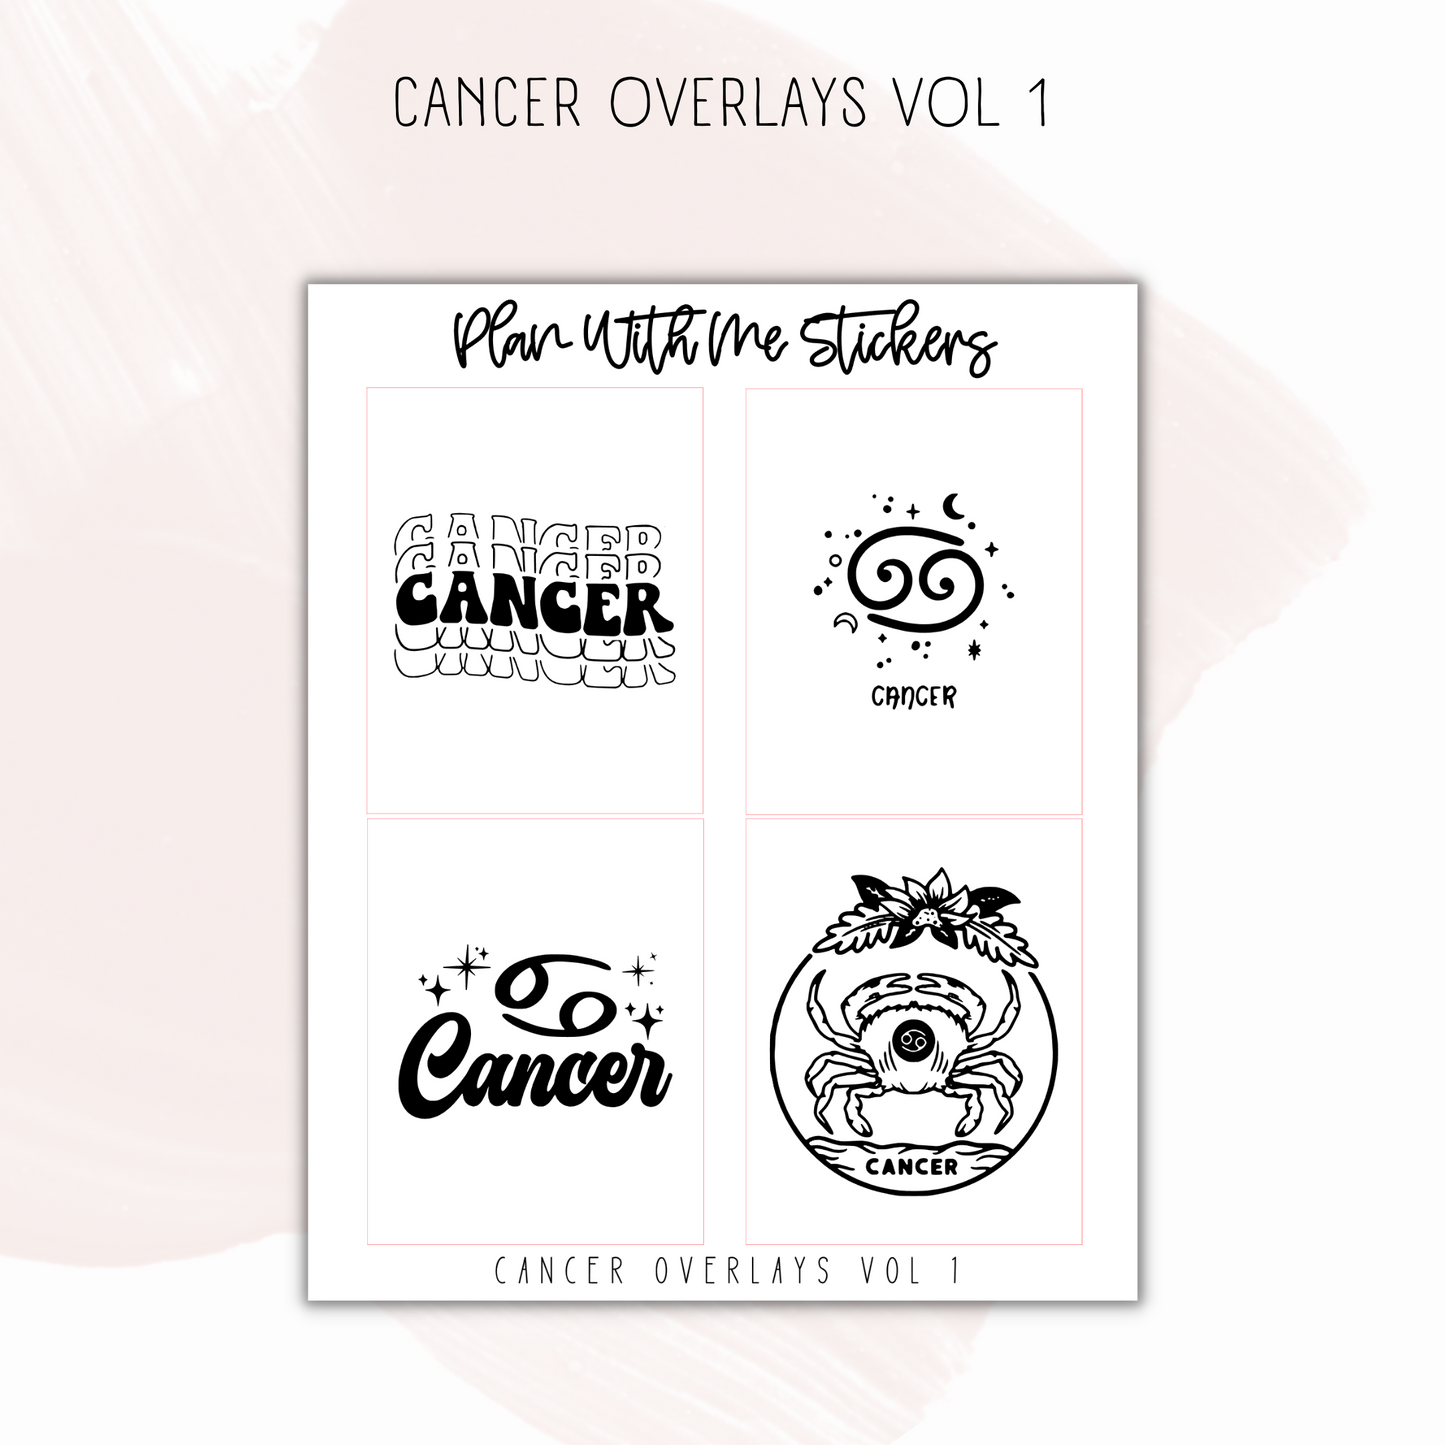 Cancer Overlays Vol 1